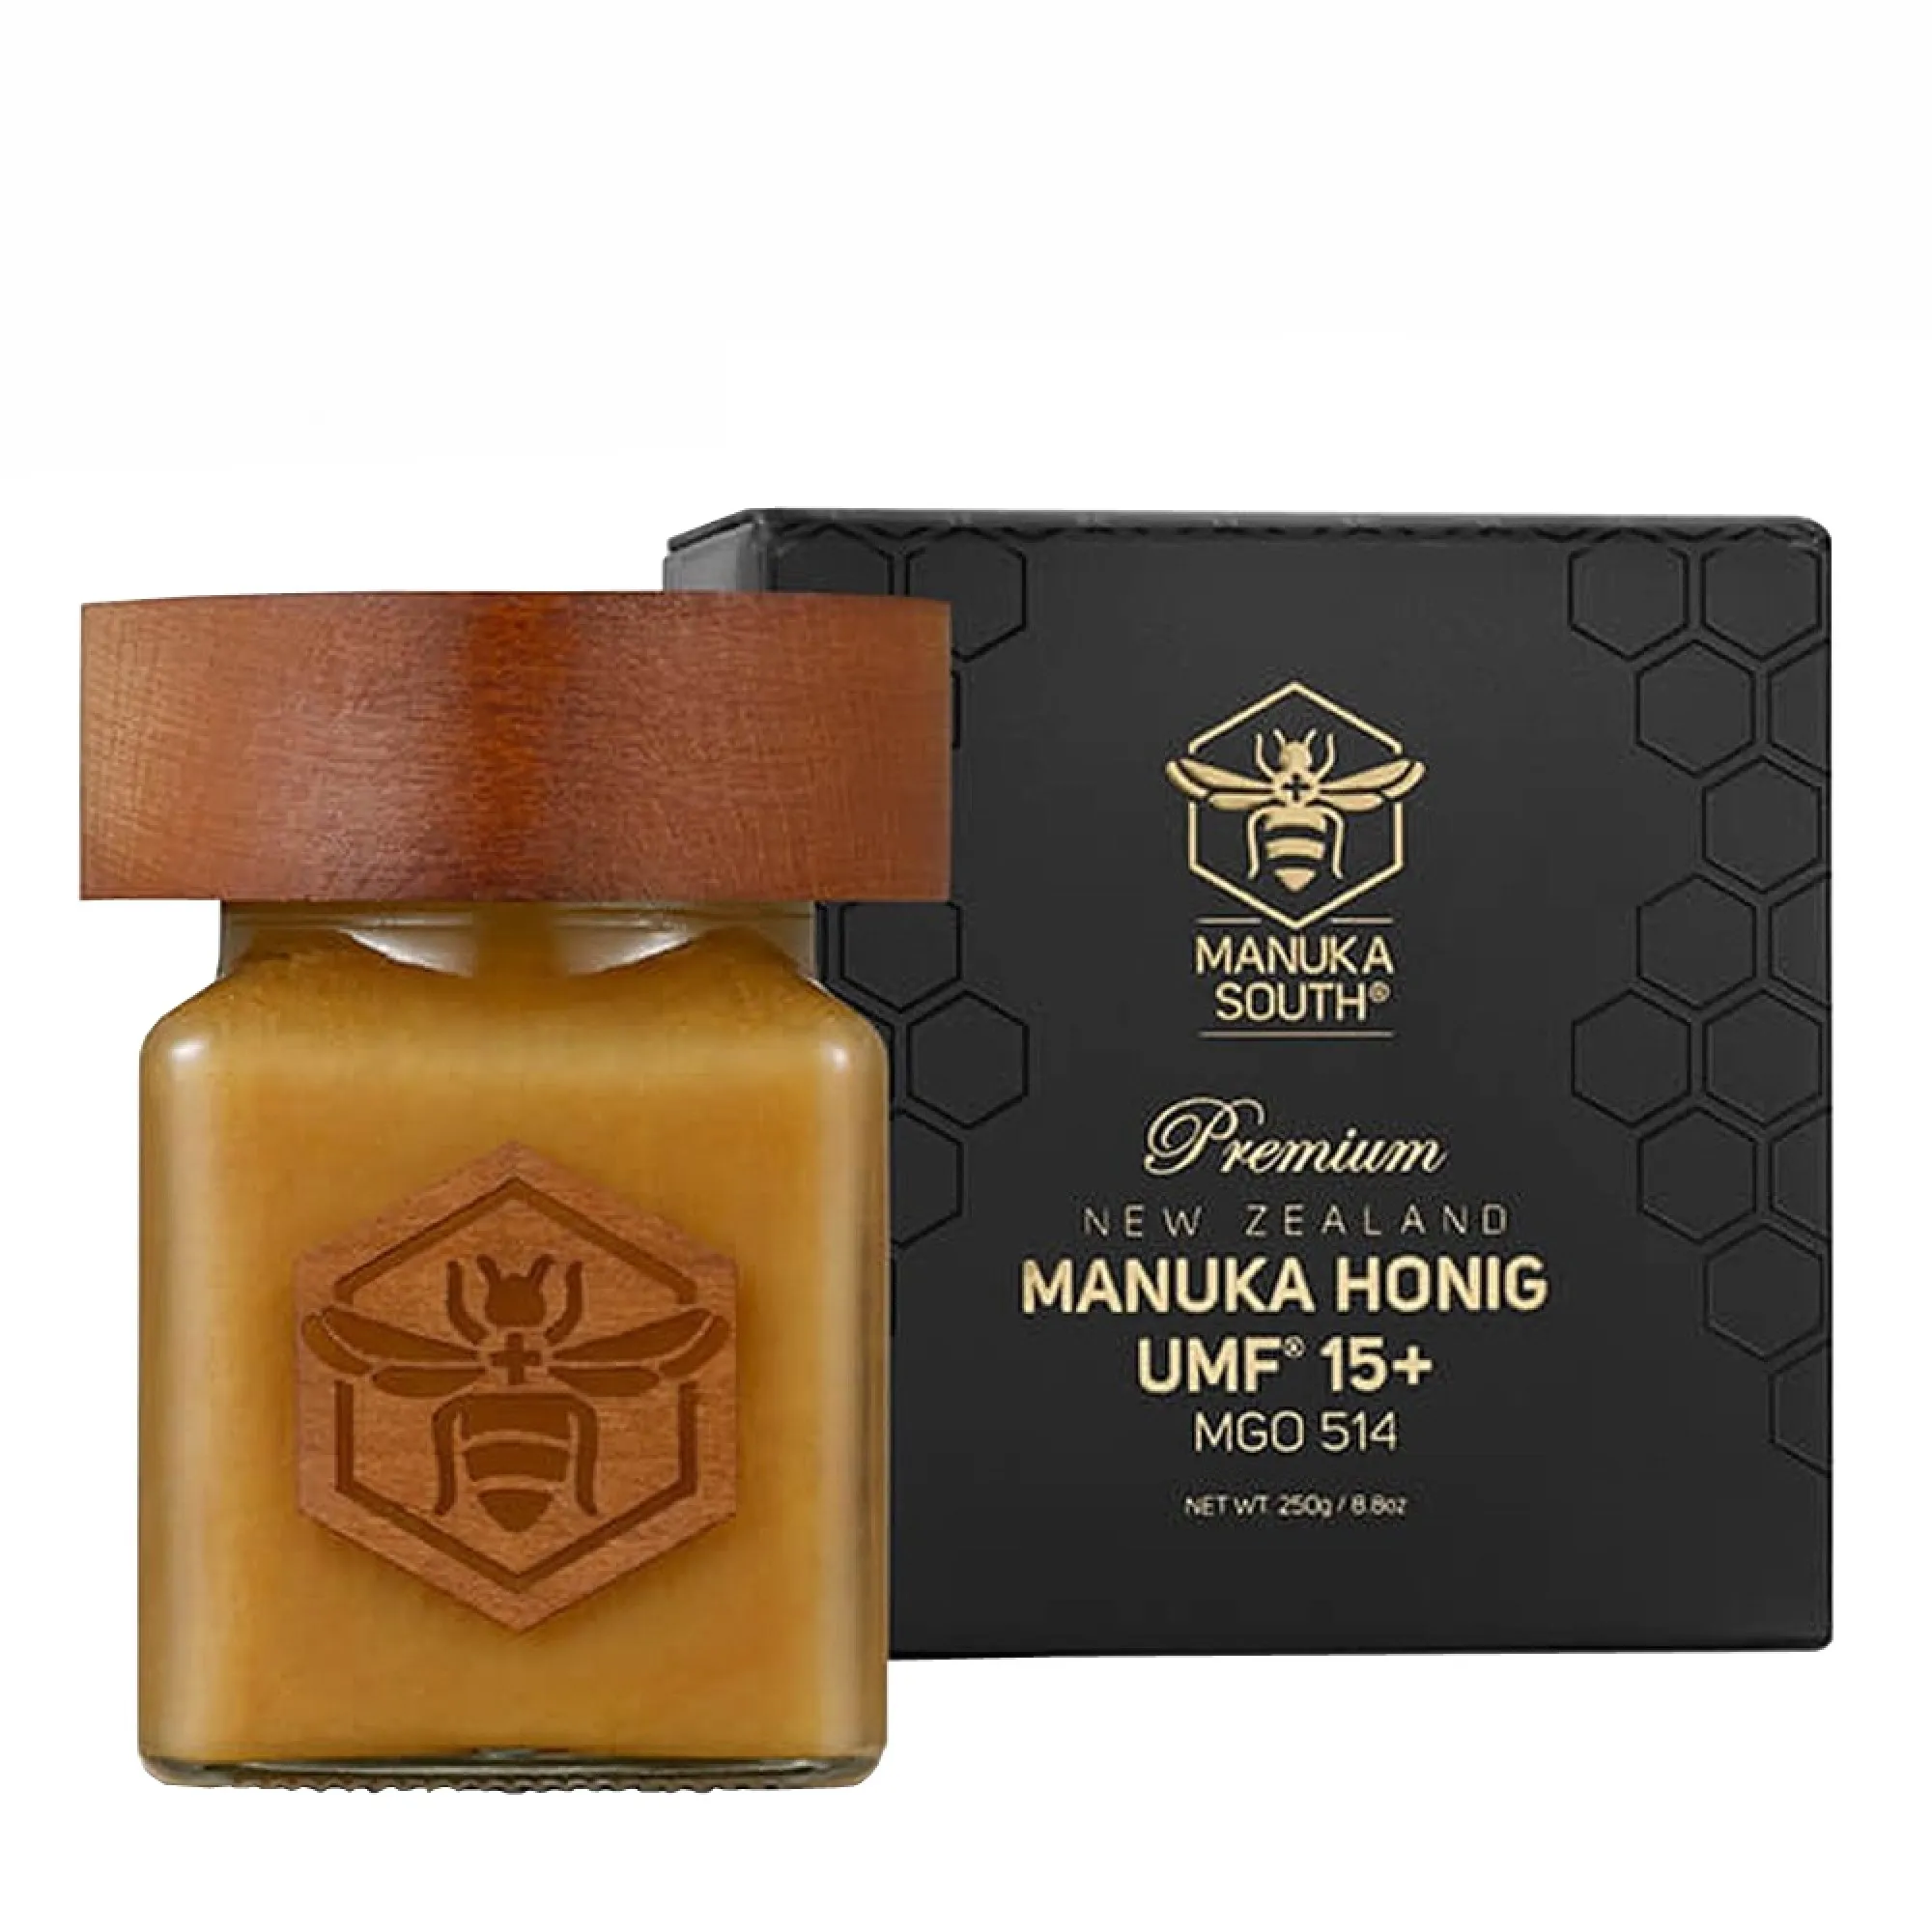 Miere de Manuka Premium Manuka South ®, UMF®15+(MGO 514+), 250g, Naturala [1]